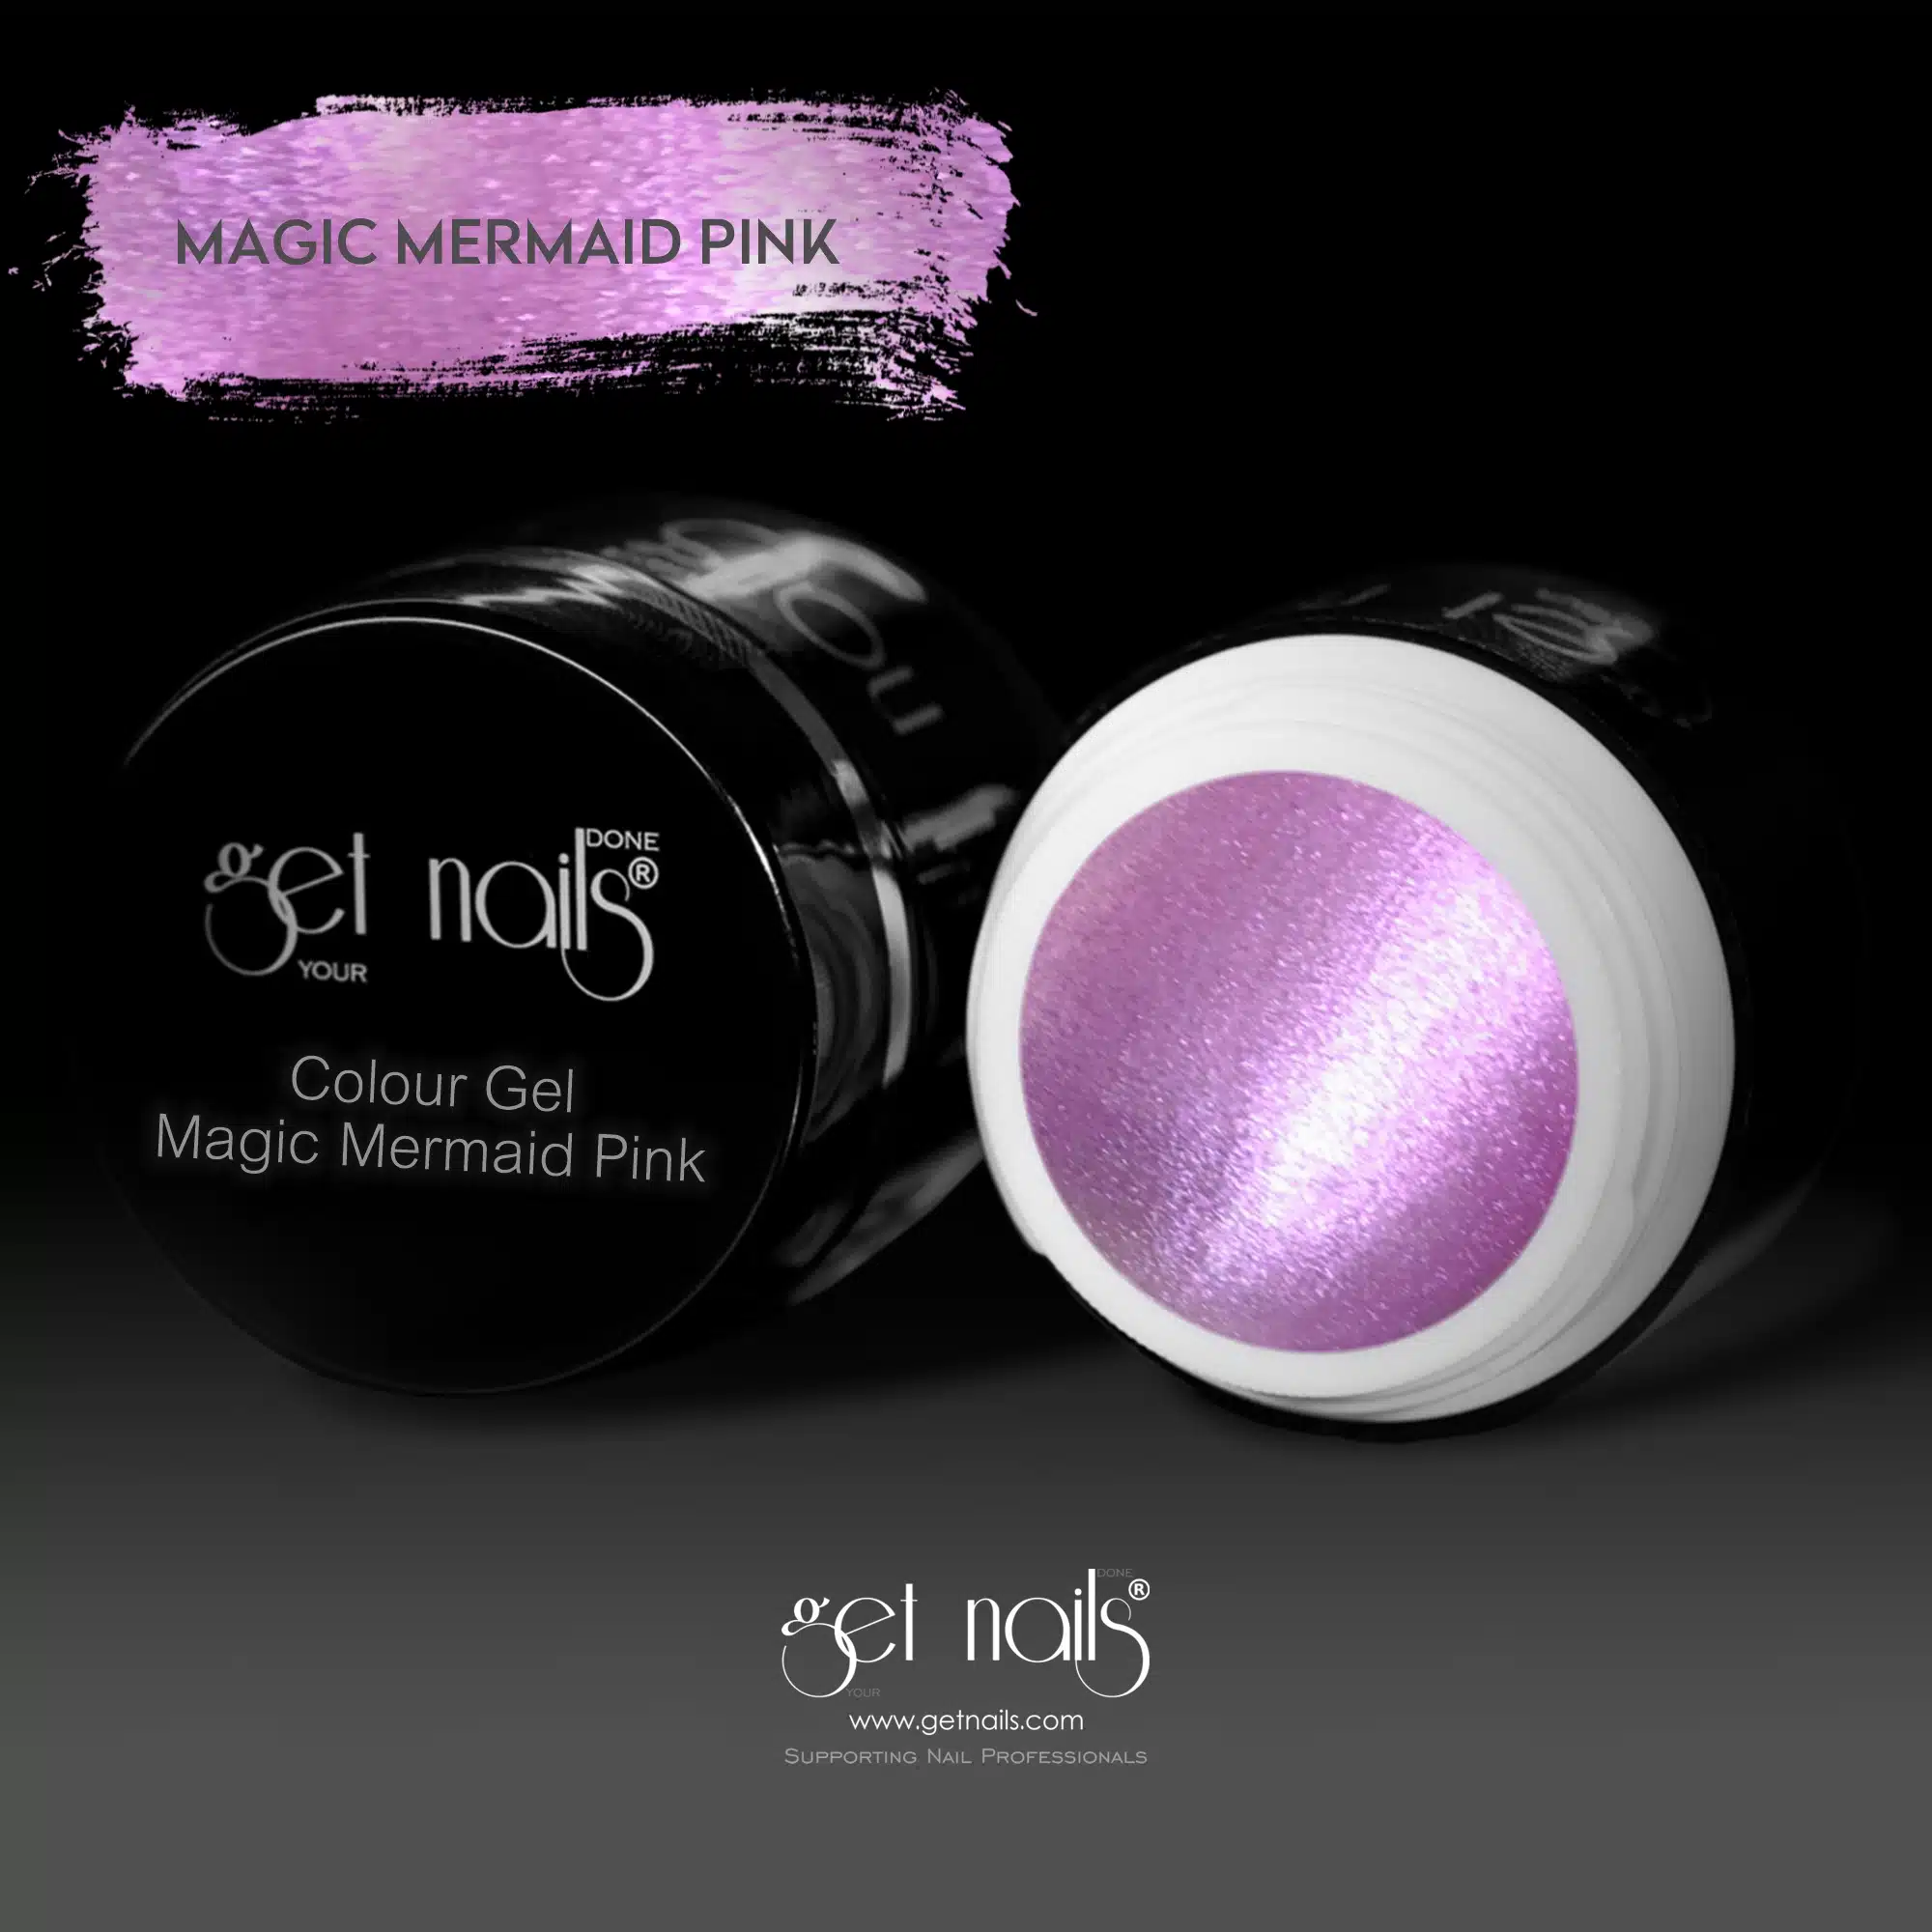 Get Nails Austria - Цветной гель Magic Mermaid Pink 5g